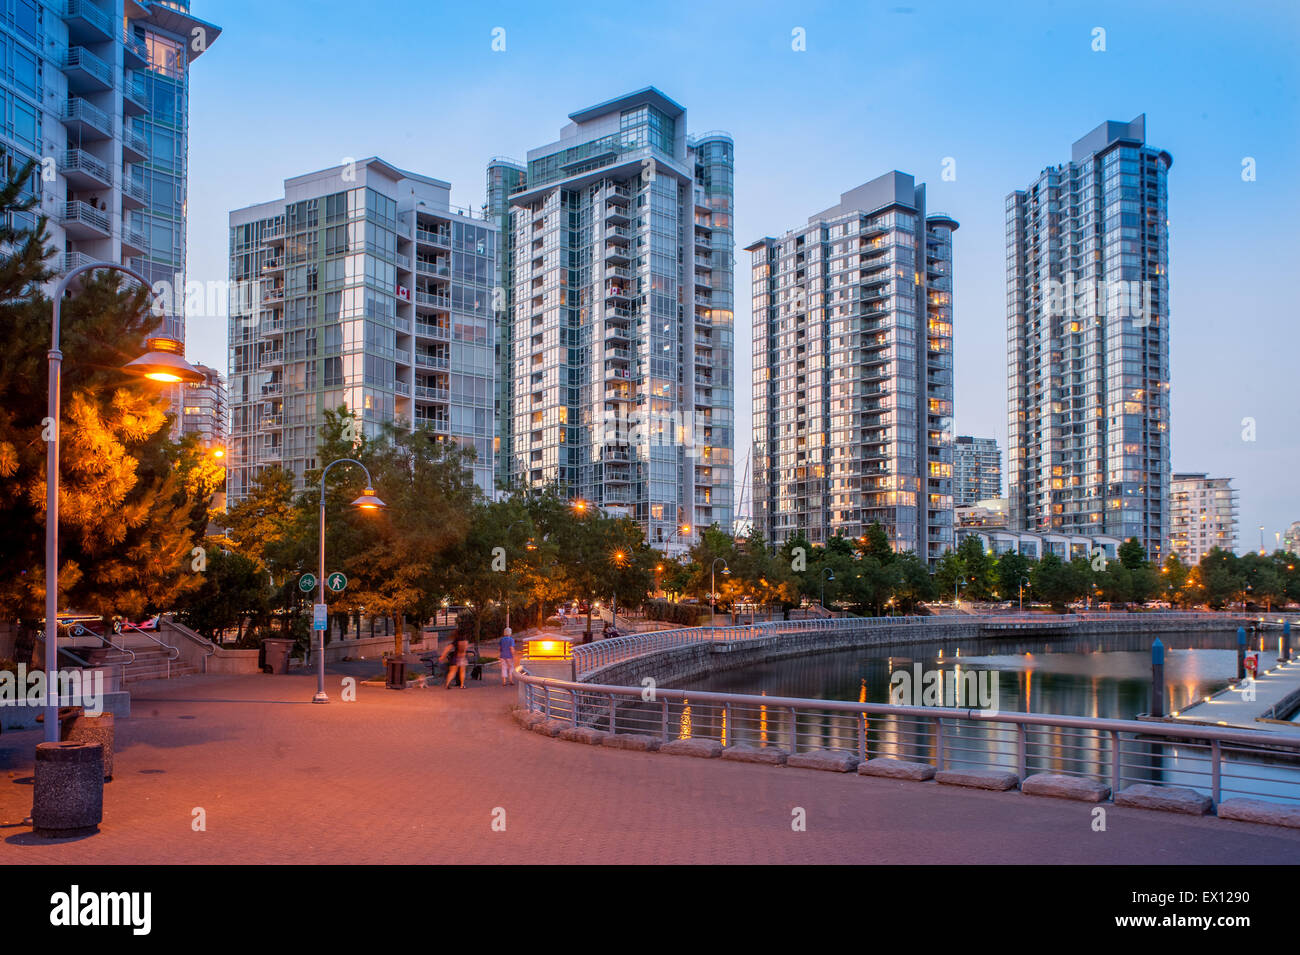 Wohn-Apartment-Türme in Vancouvers Yaletown Nachbarschaft.  Skyline von Vancouver Immobilien. Stockfoto